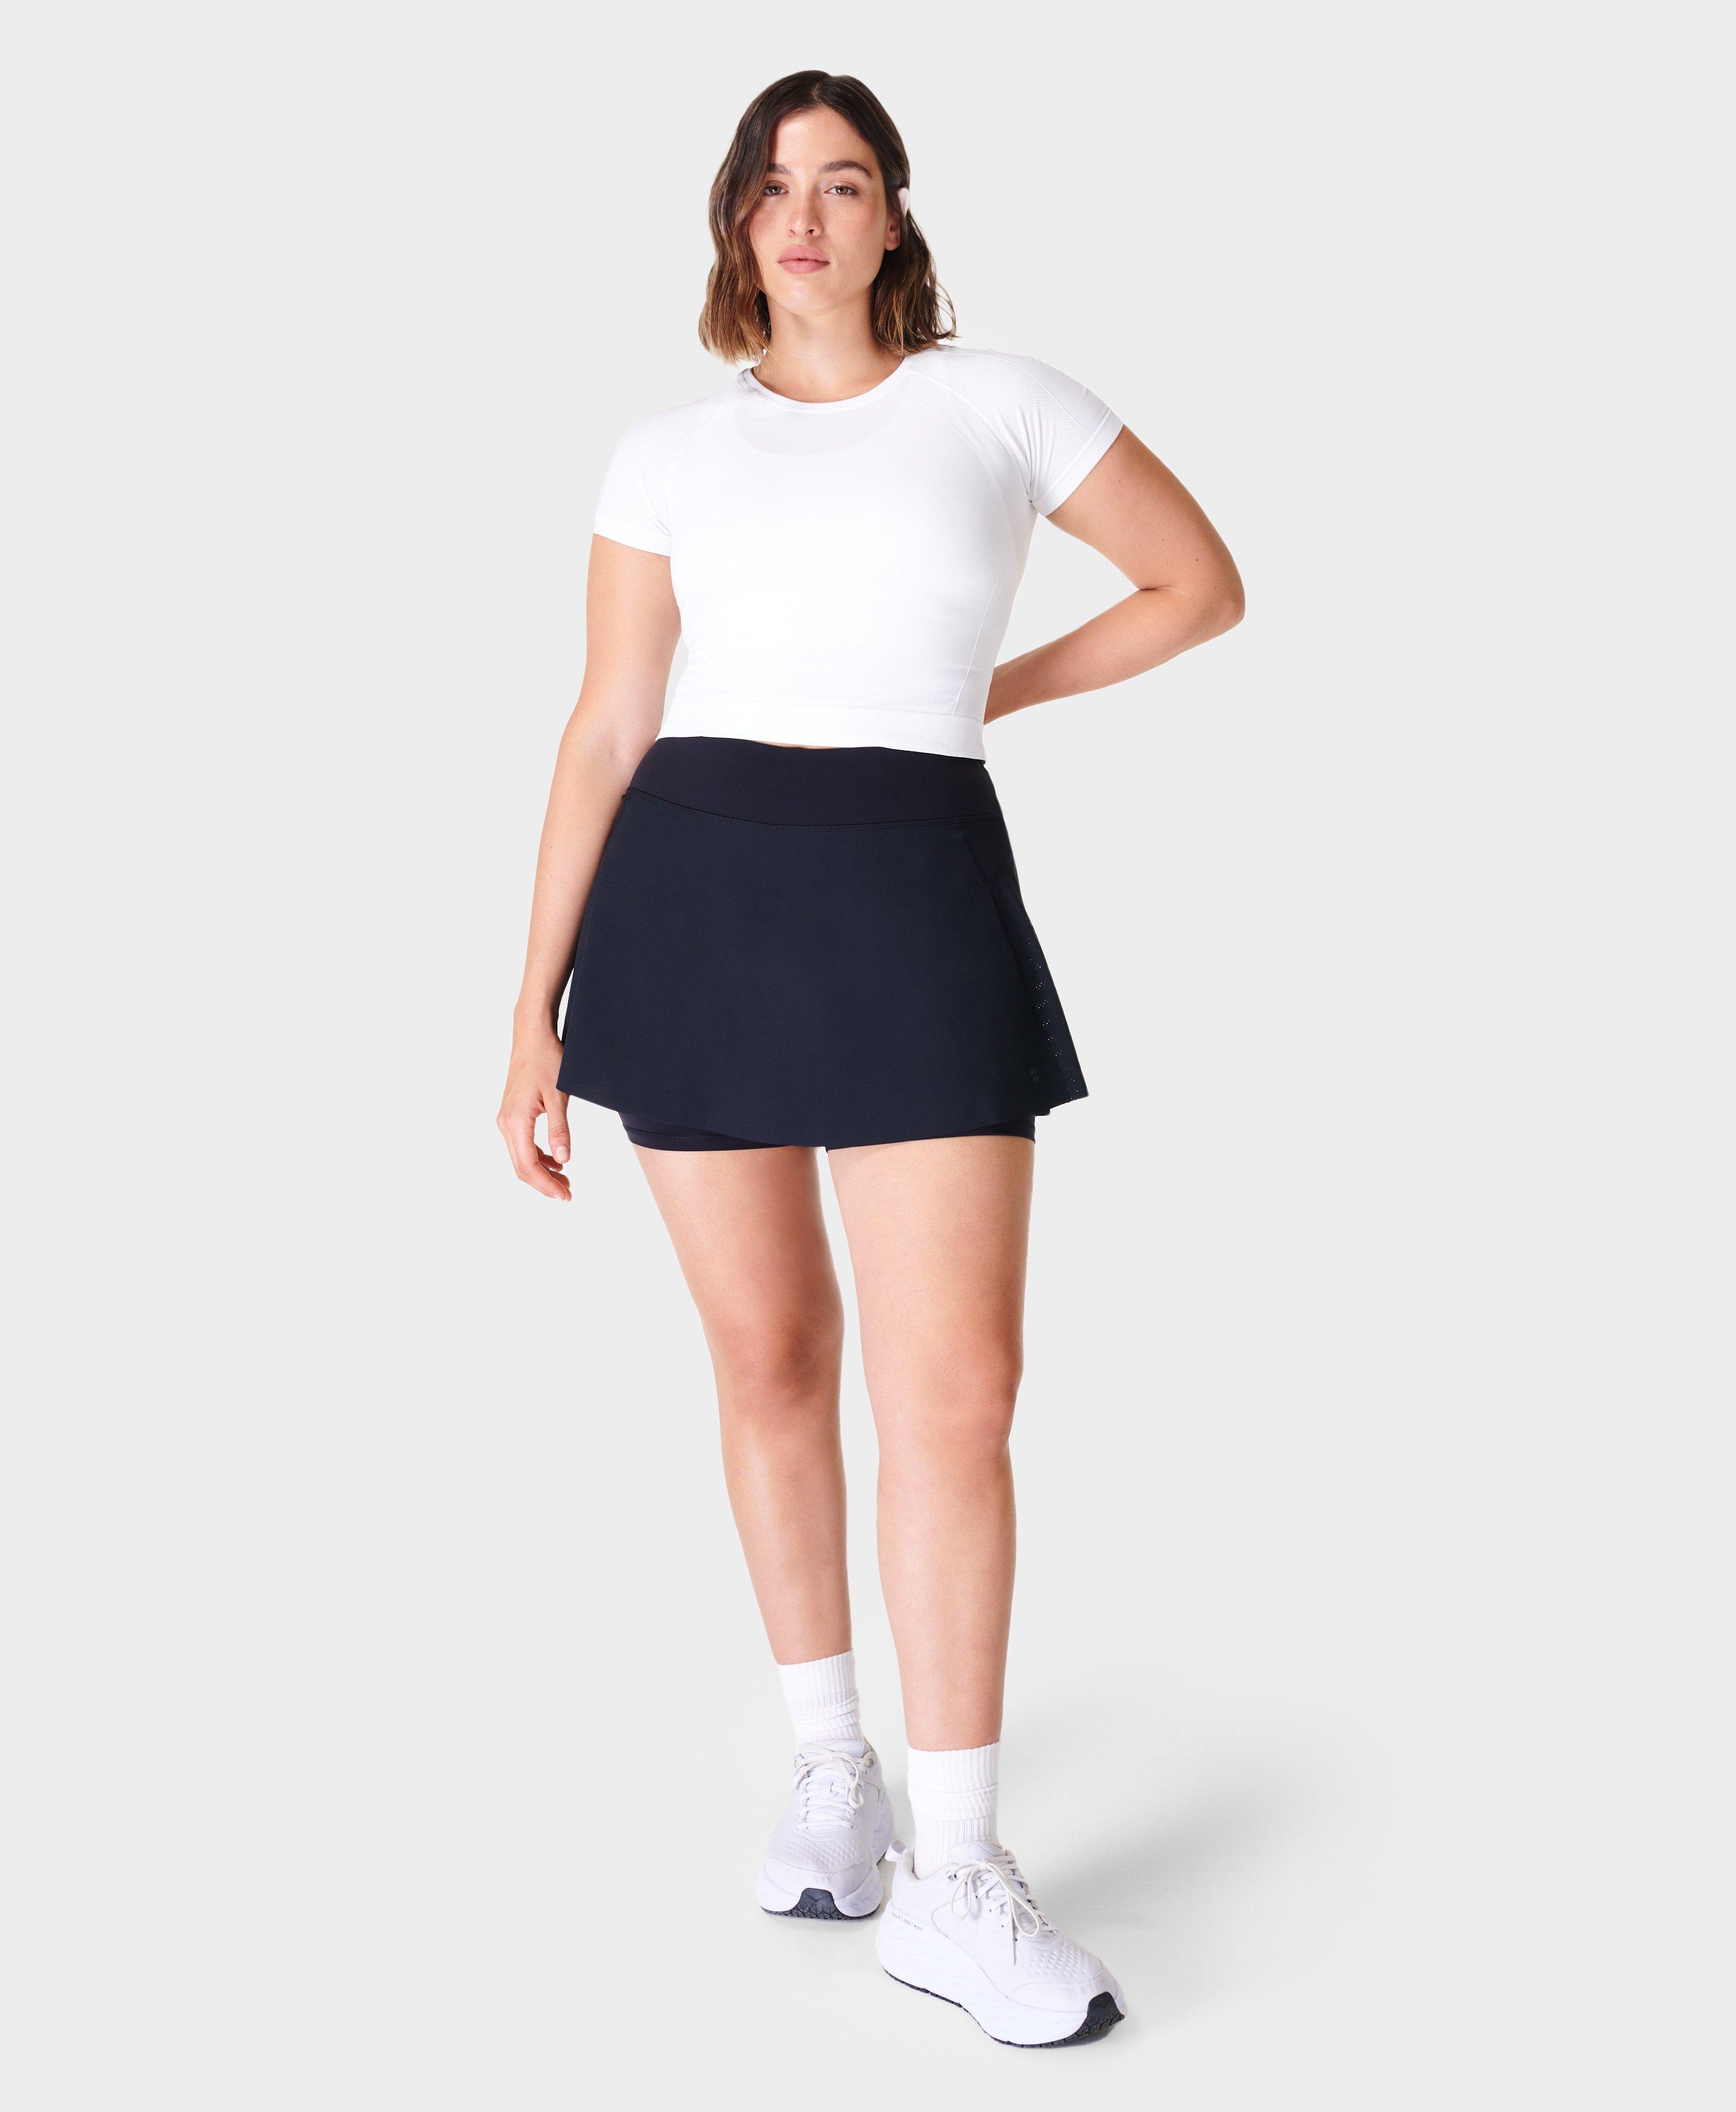 Women's Shorts, Skorts and Skirts